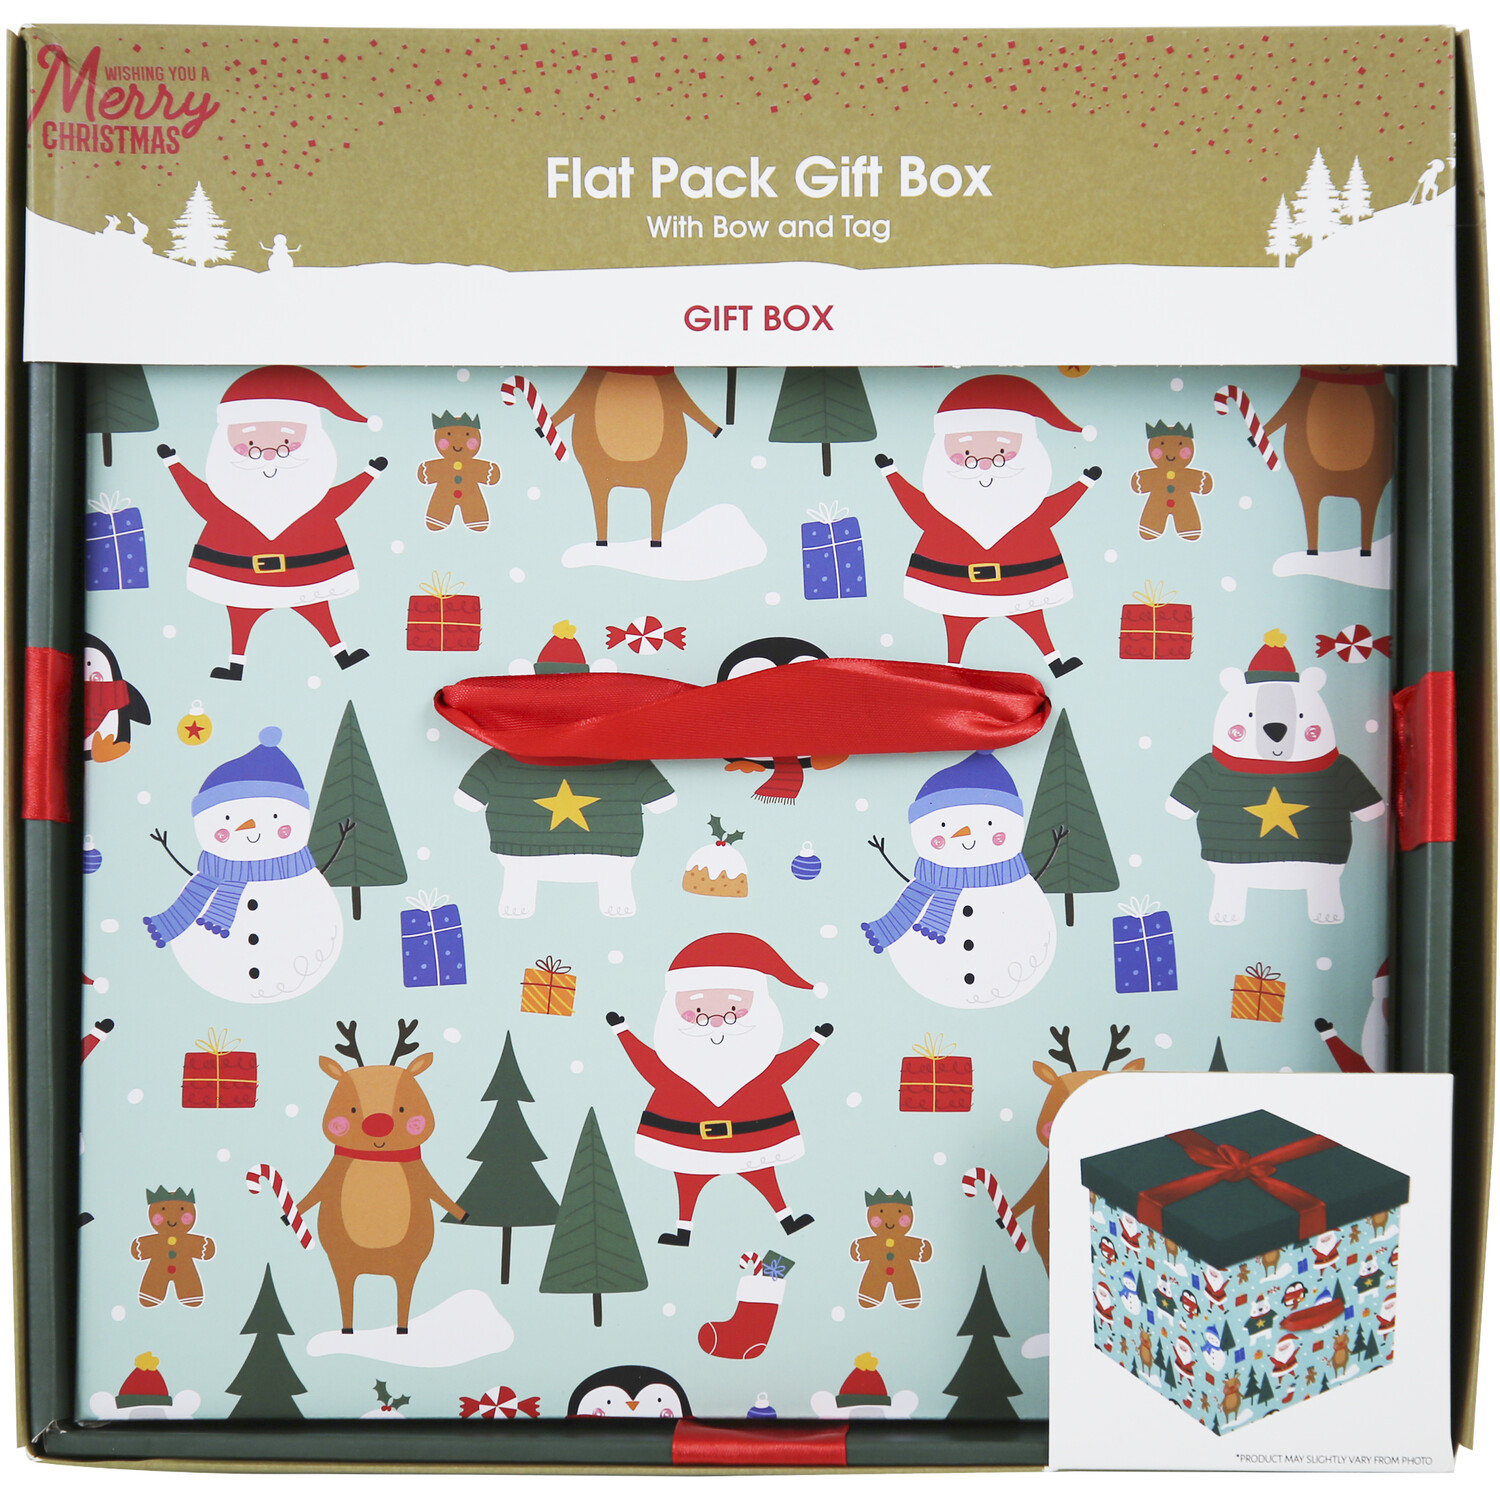 Festive Flat Pack Gift Box - Festive Characters Image 2